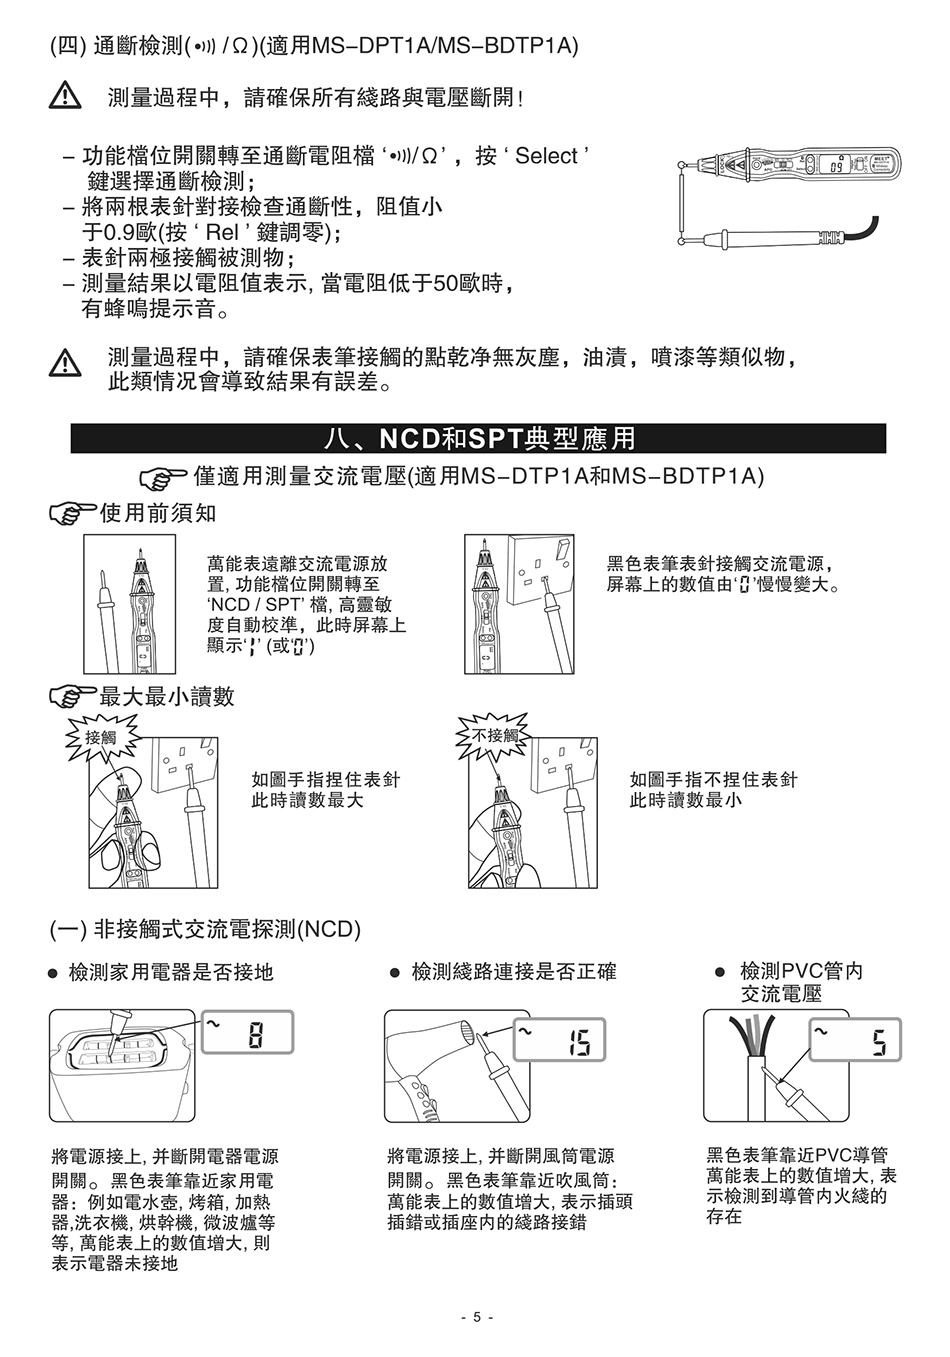 MEET MS-BDTP1A藍牙筆形數字萬用表詳細Catalog介紹（中文）5